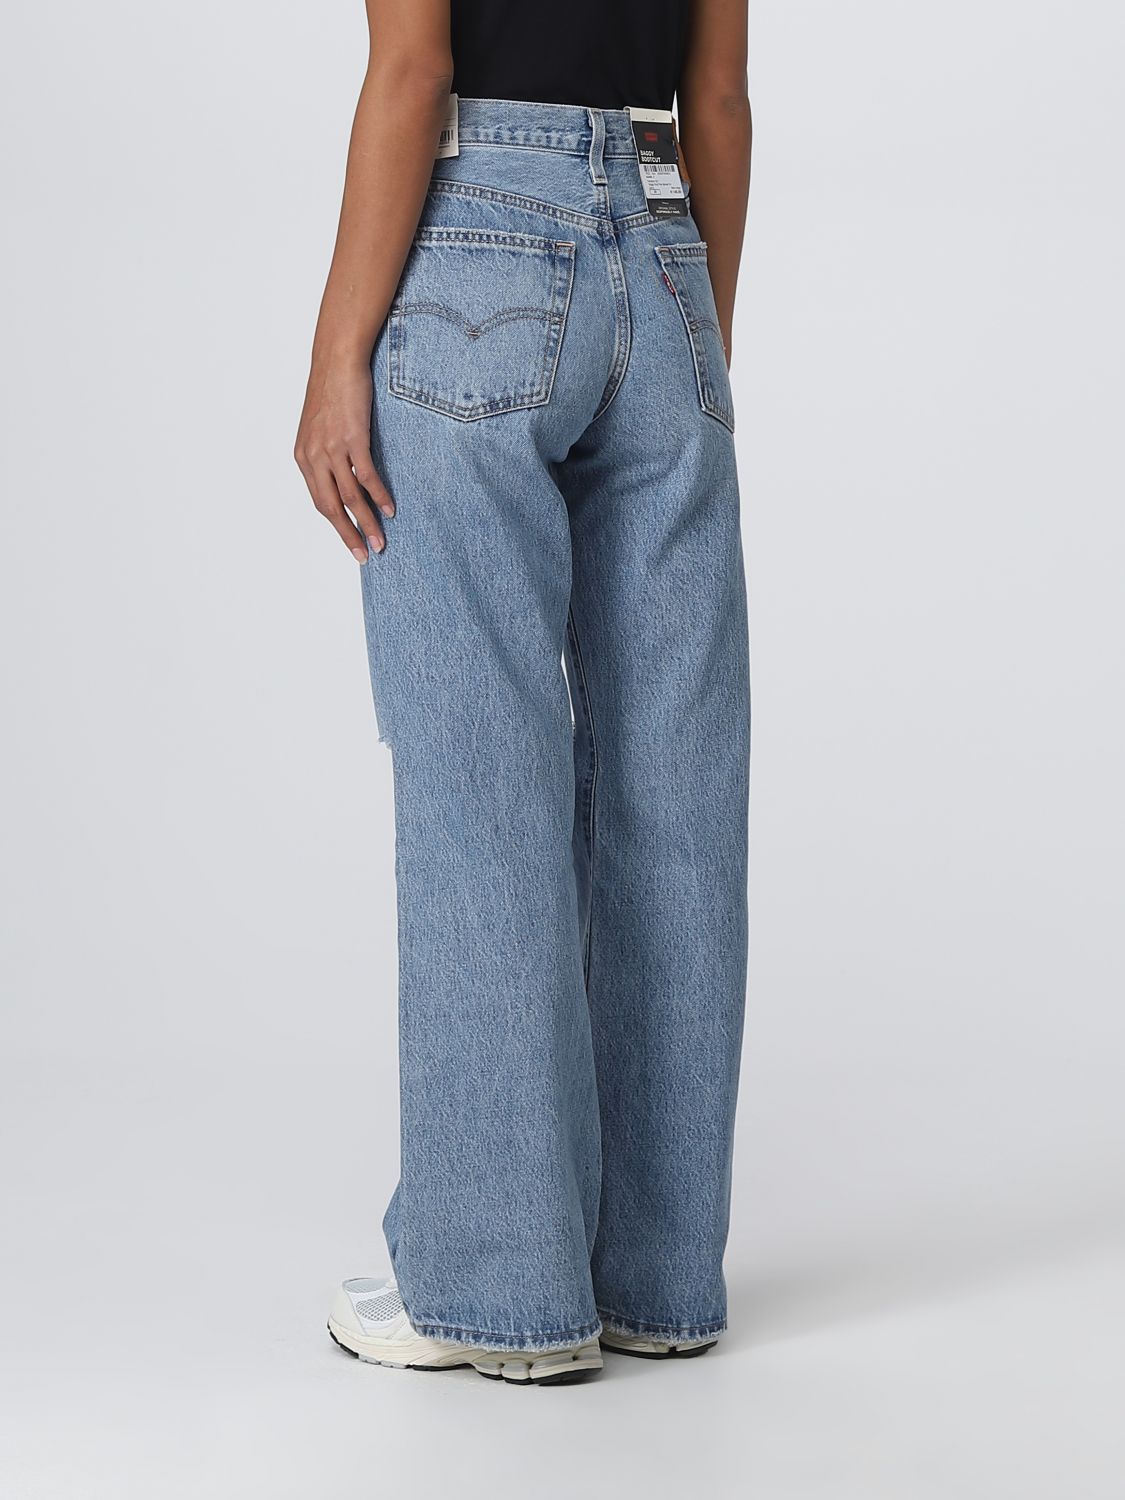 LEVI'S: jeans for woman - Denim | Levi's jeans A34950002 online on  